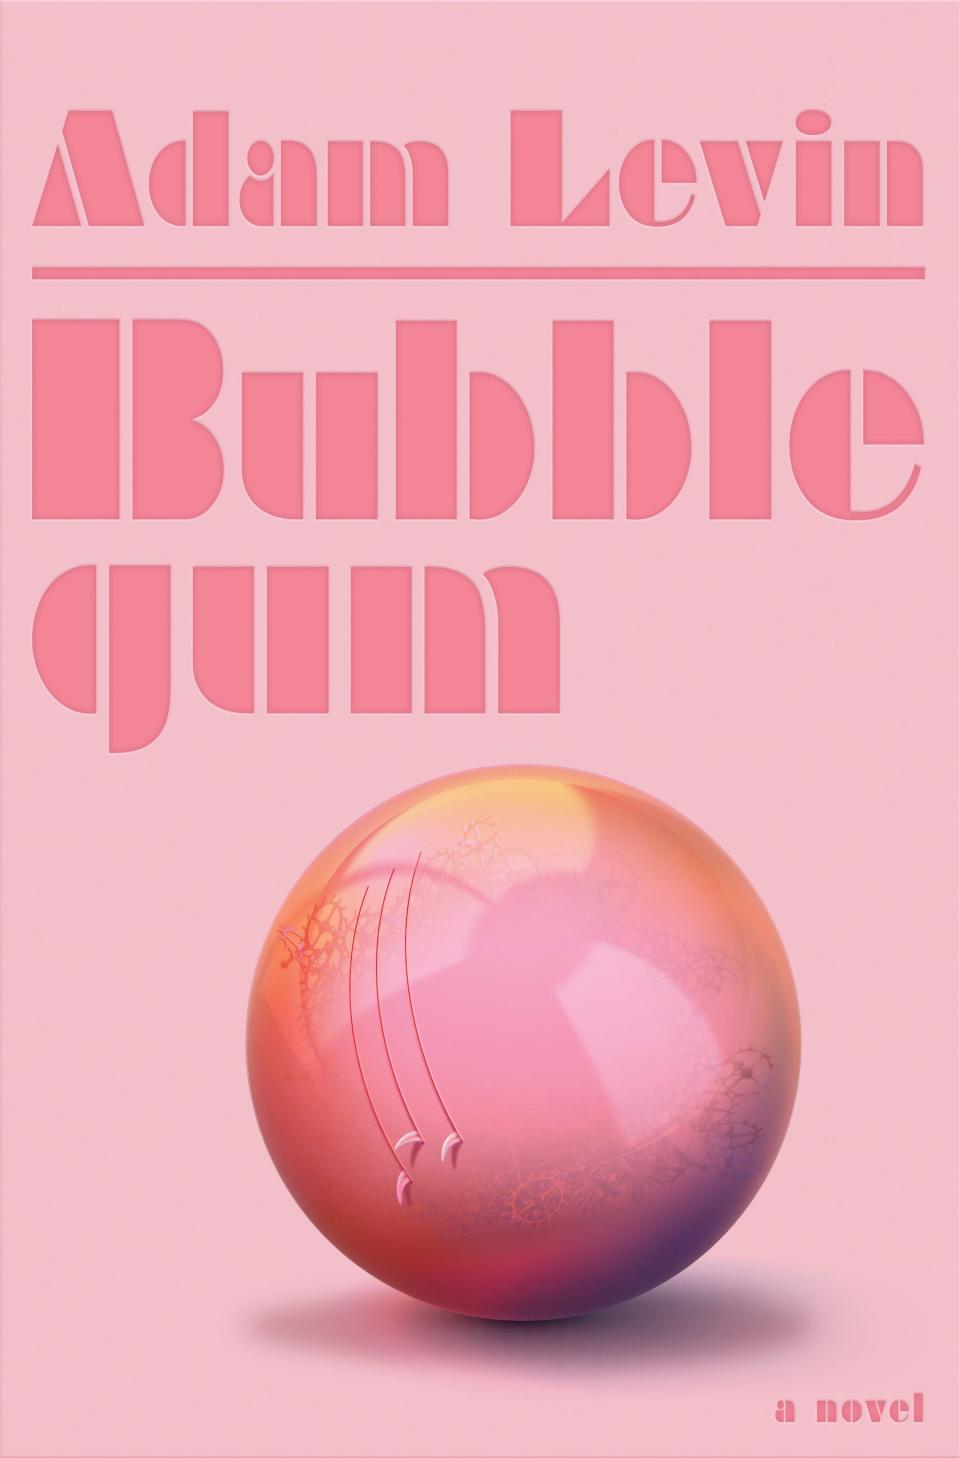 33) ‘Bubblegum’ by Adam Levin